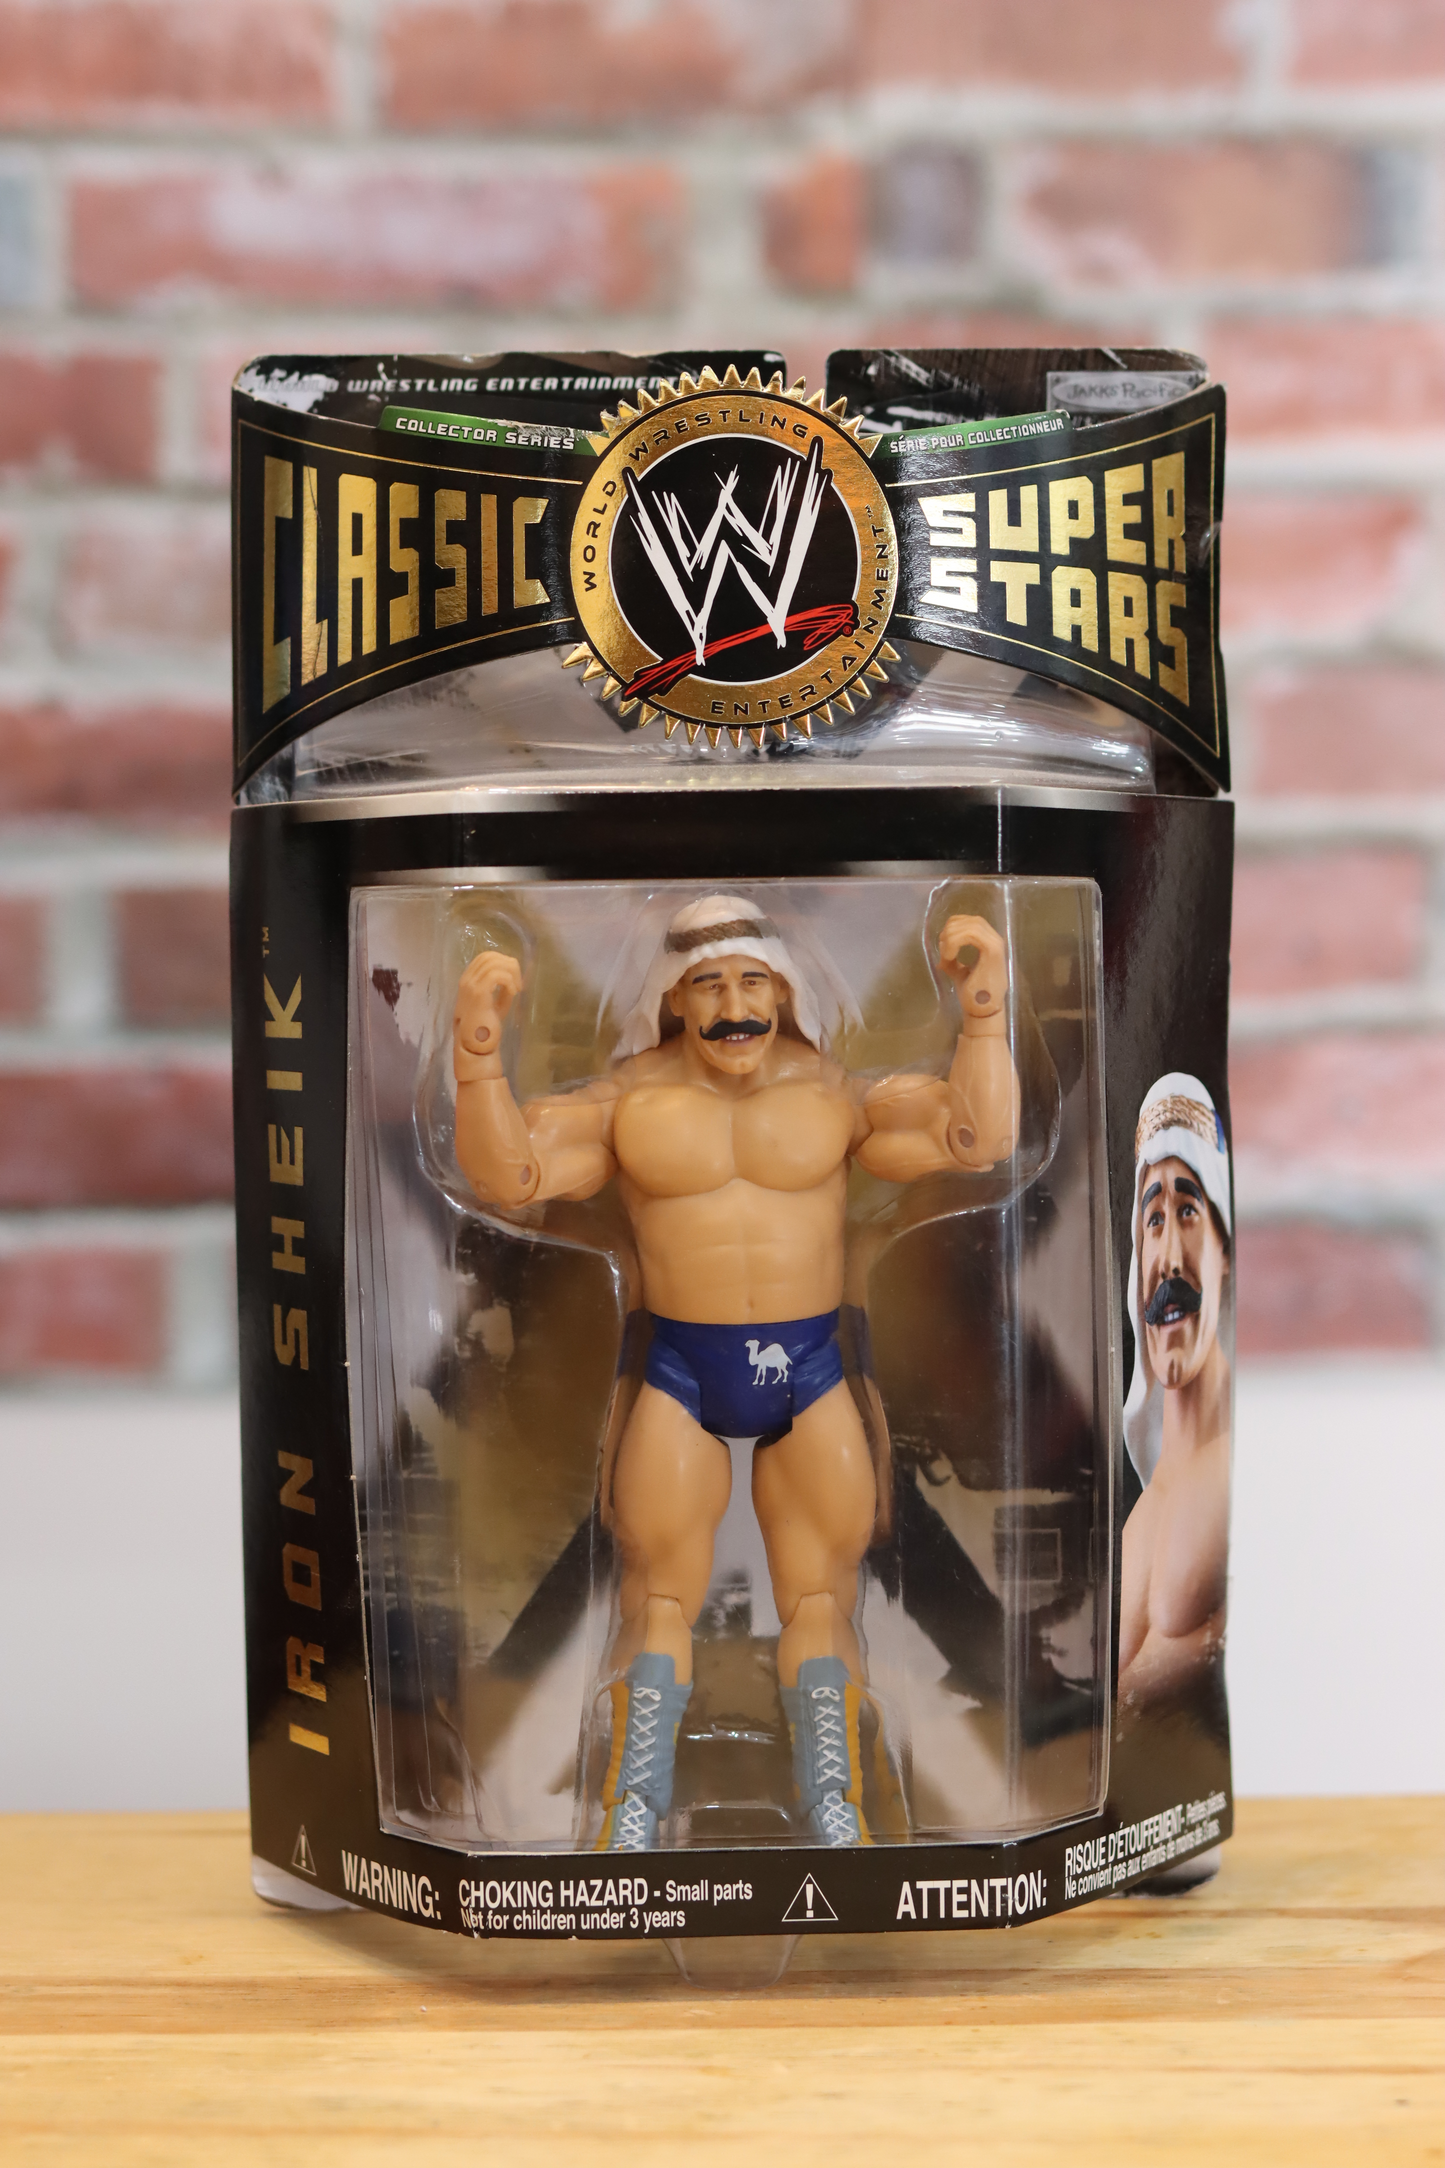 2005 Jakks Pacific Classic Superstars WWF WWE Wrestling Figure The Iron Sheik